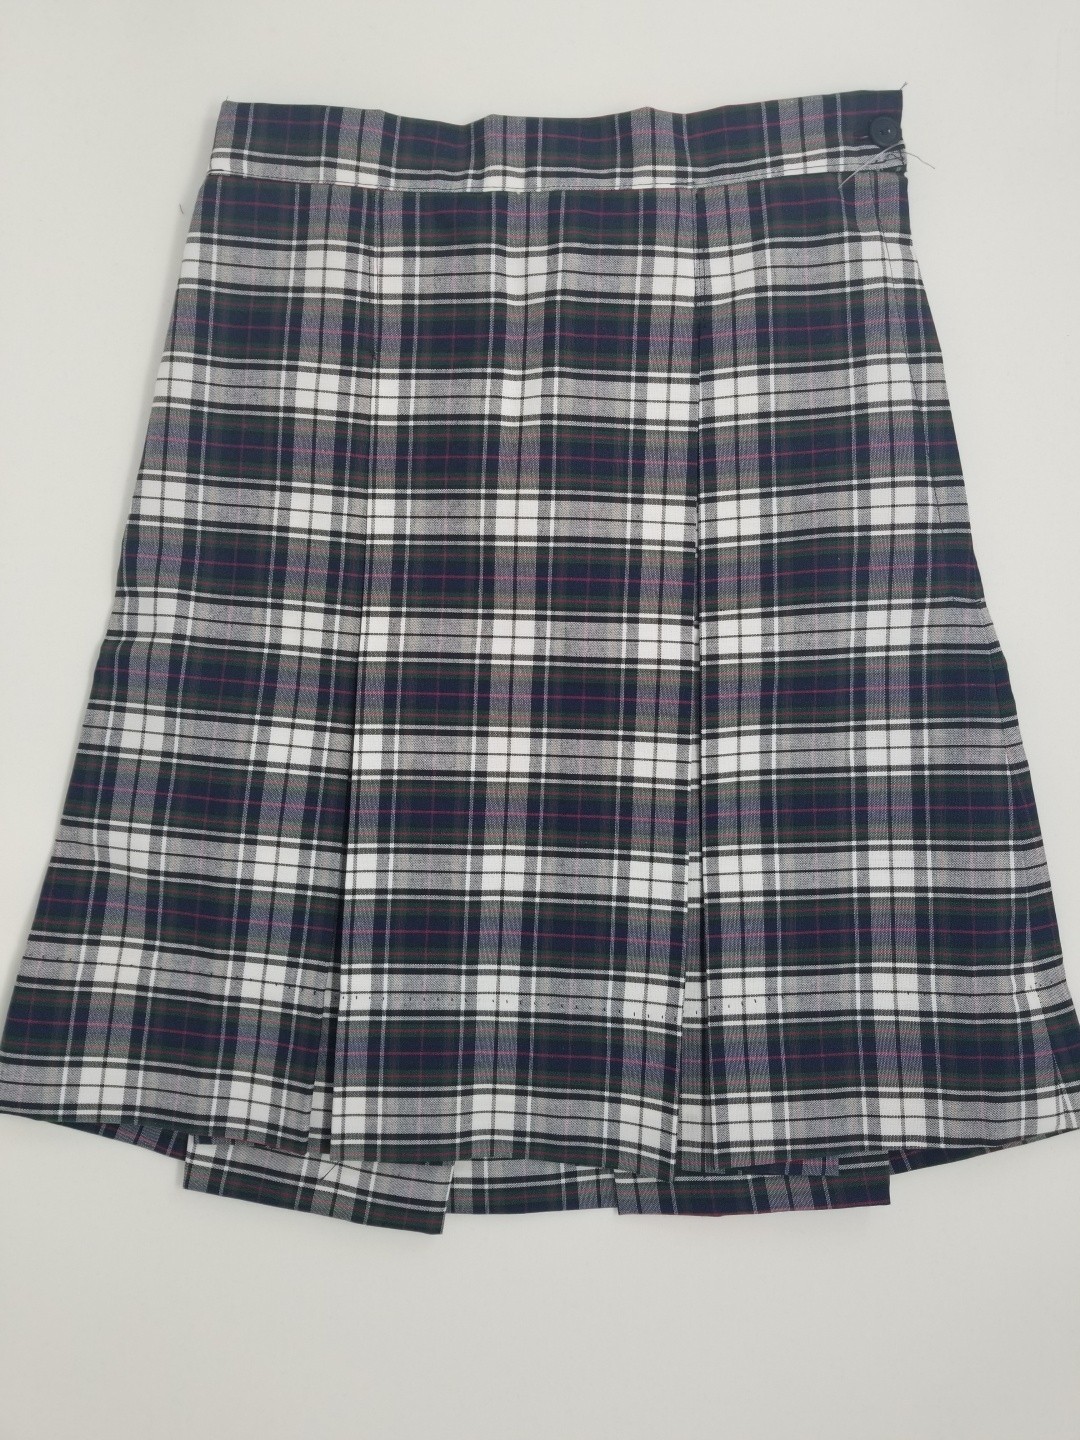 Box Pleat Skirt- Style 48-Plaid 23